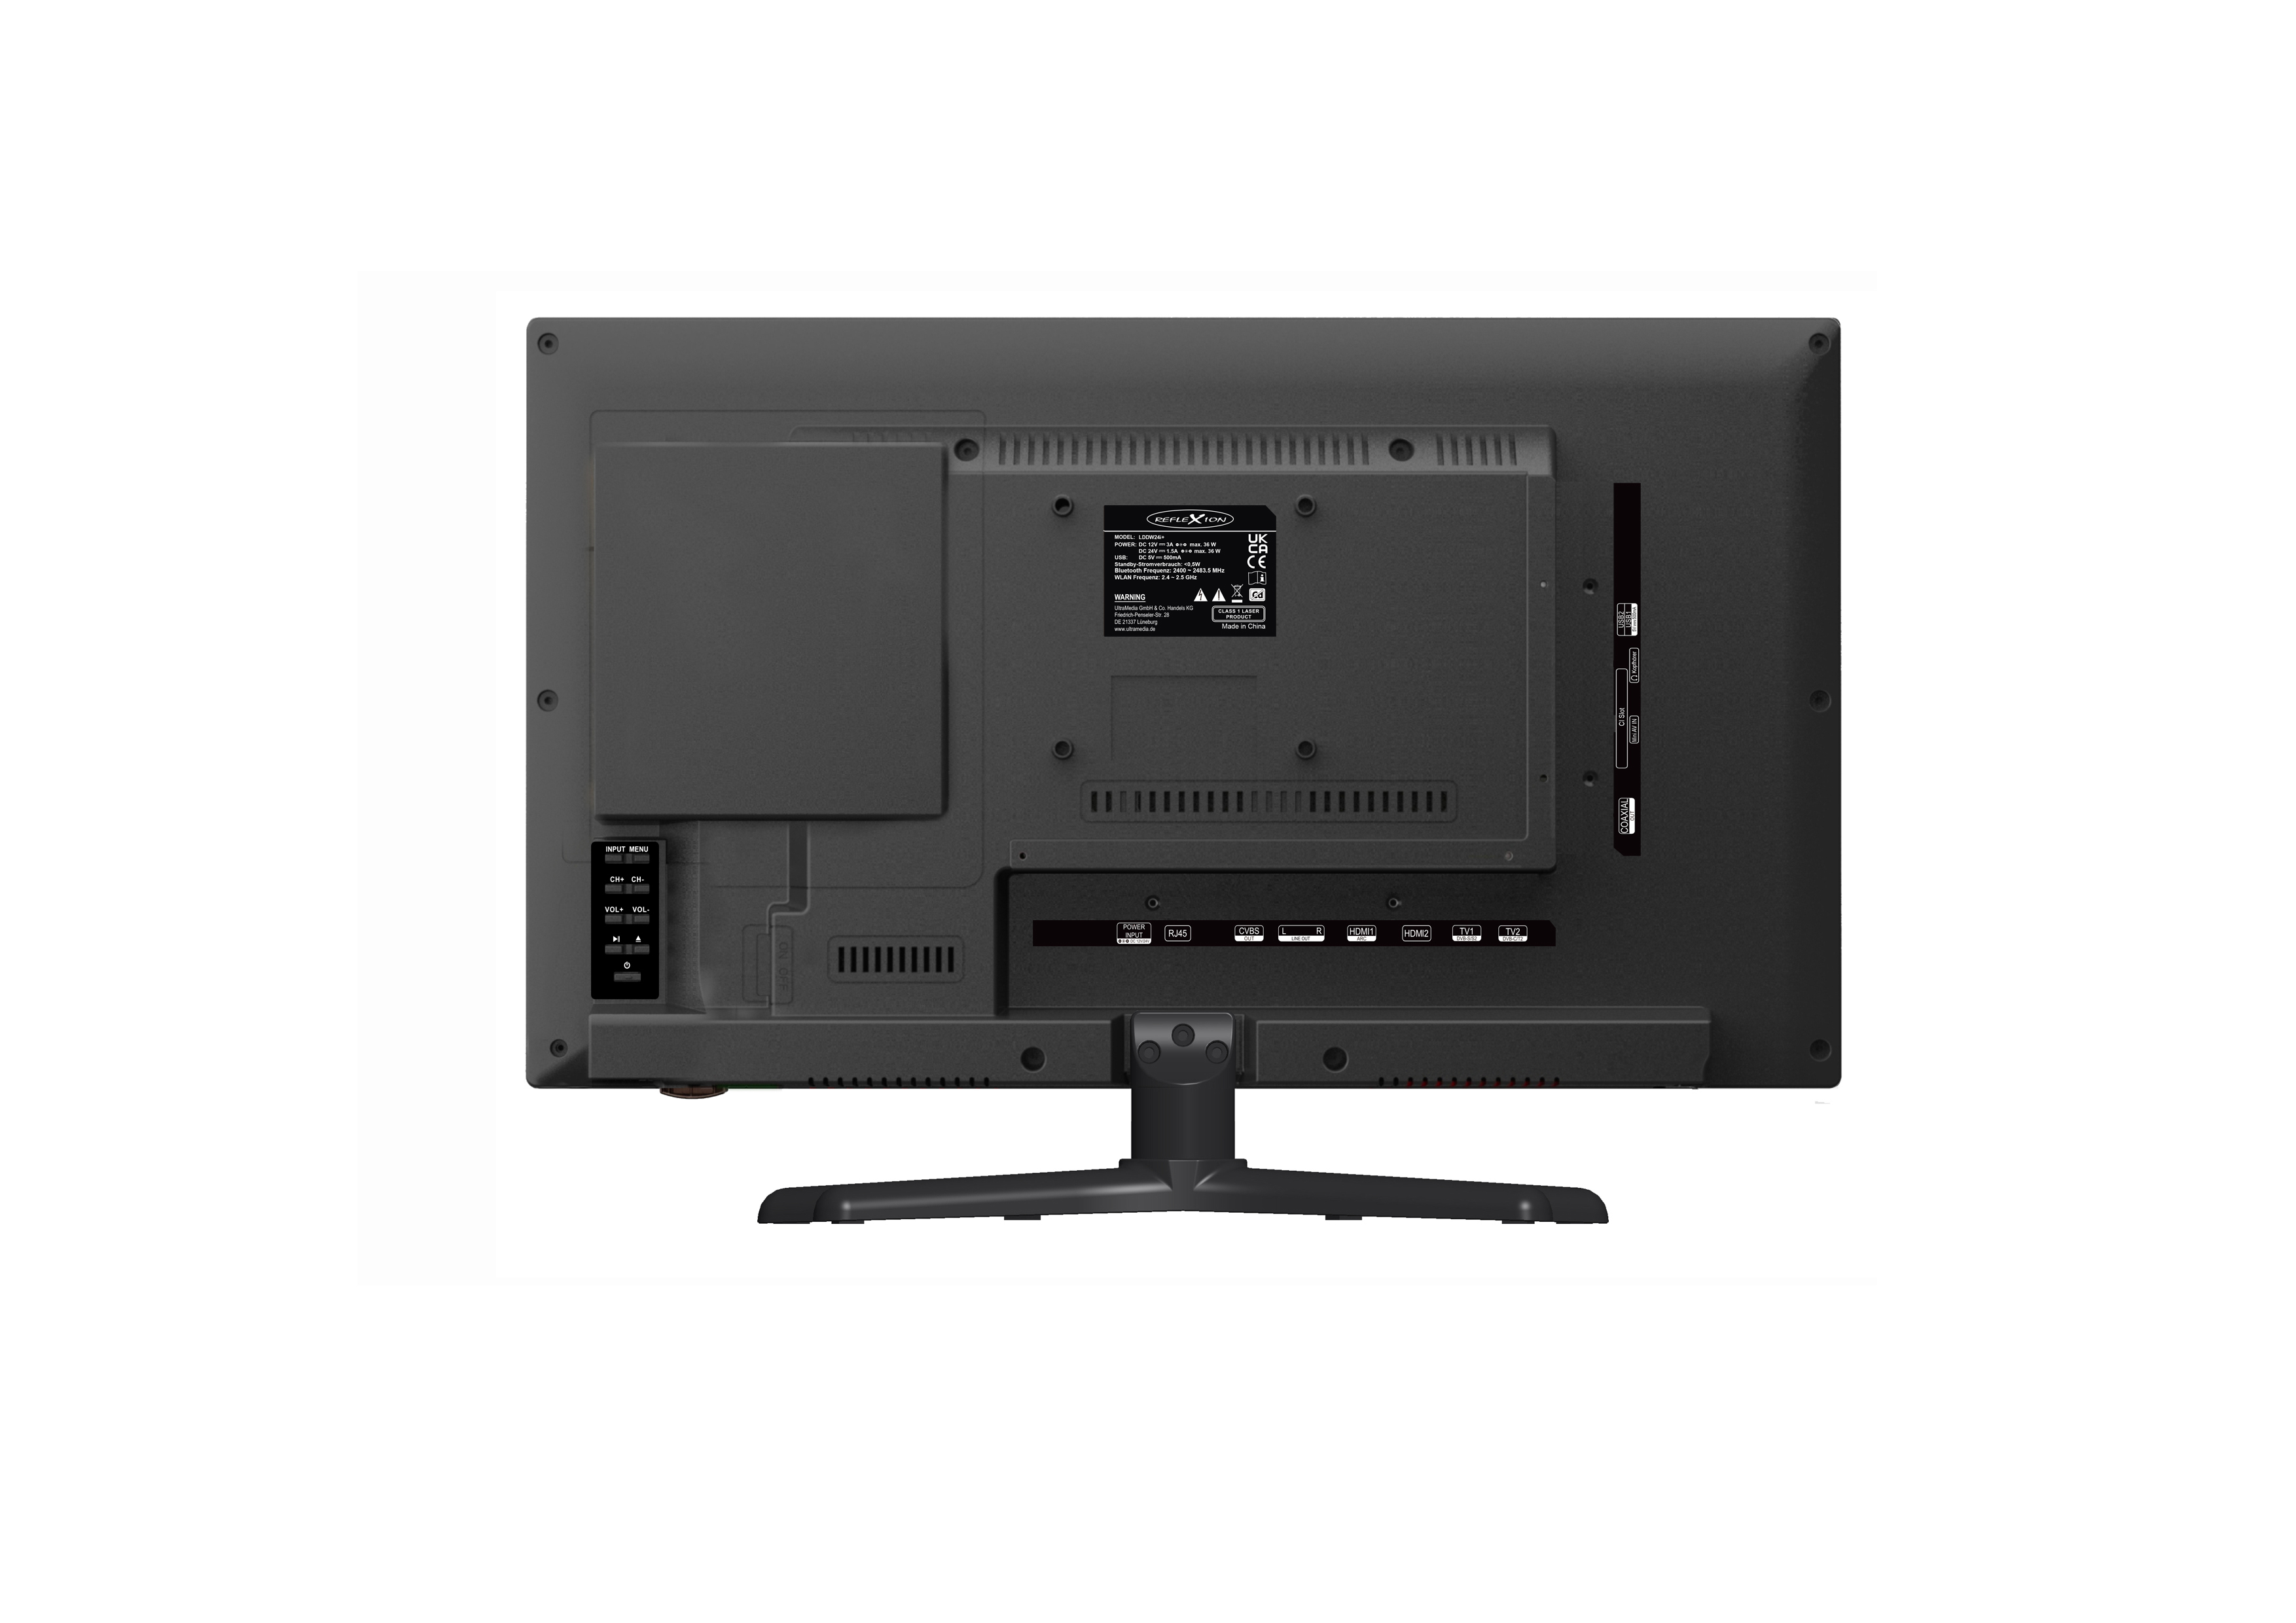 / 80 LDDW32I+ TV) REFLEXION SMART cm, 32 (Flat, Full-HD, Zoll TV LED